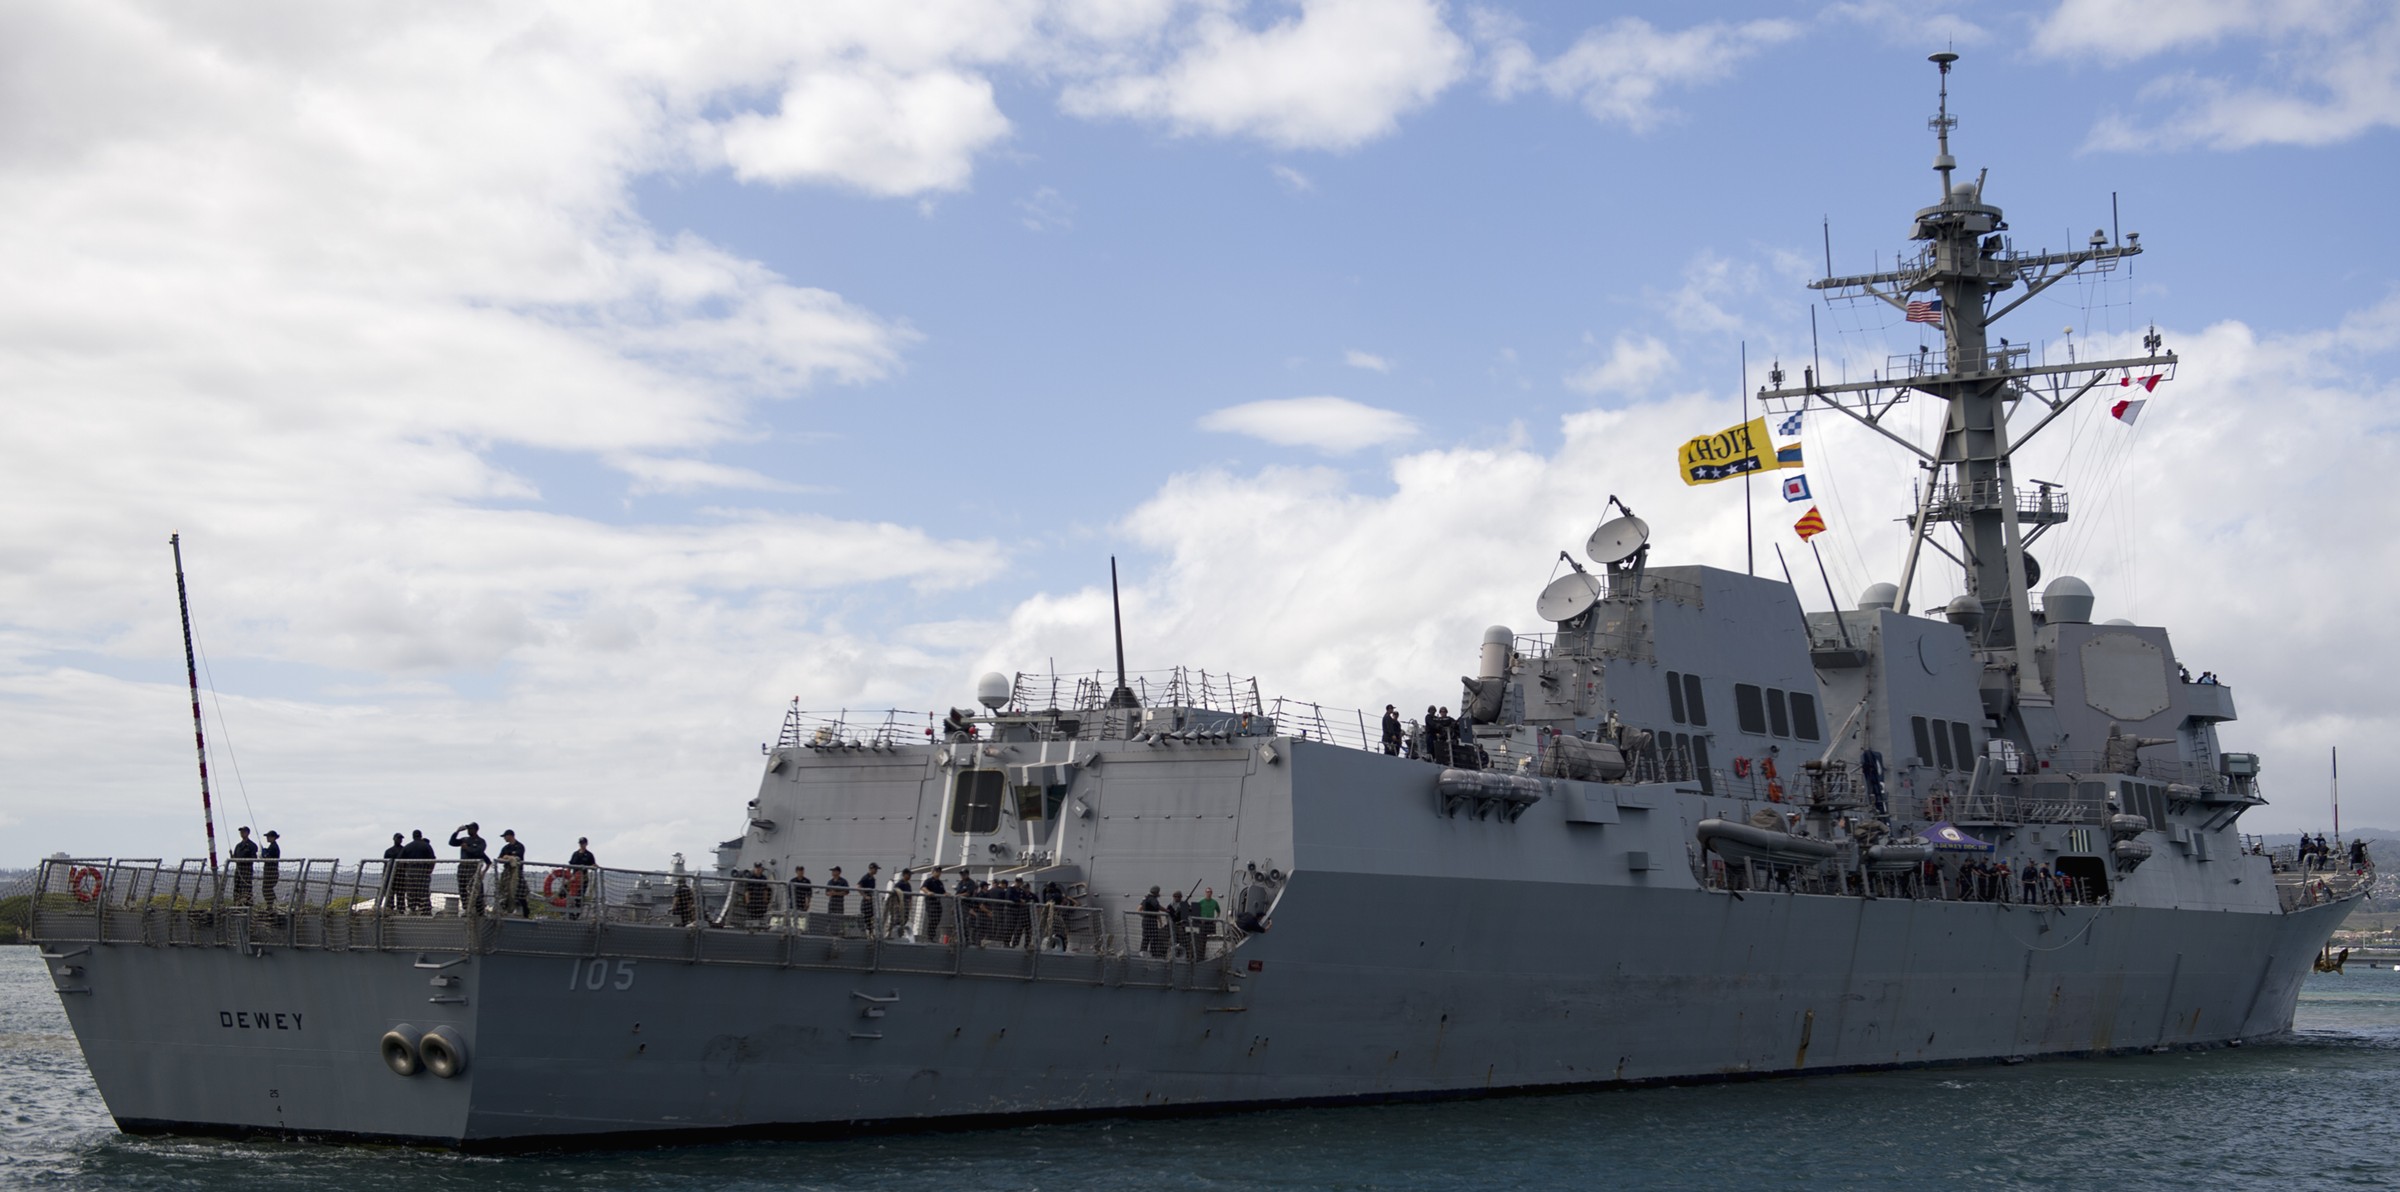 ddg-110 uss dewey arleigh burke class guided missile destroyer aegis us navy pearl harbor hickam hawaii 70